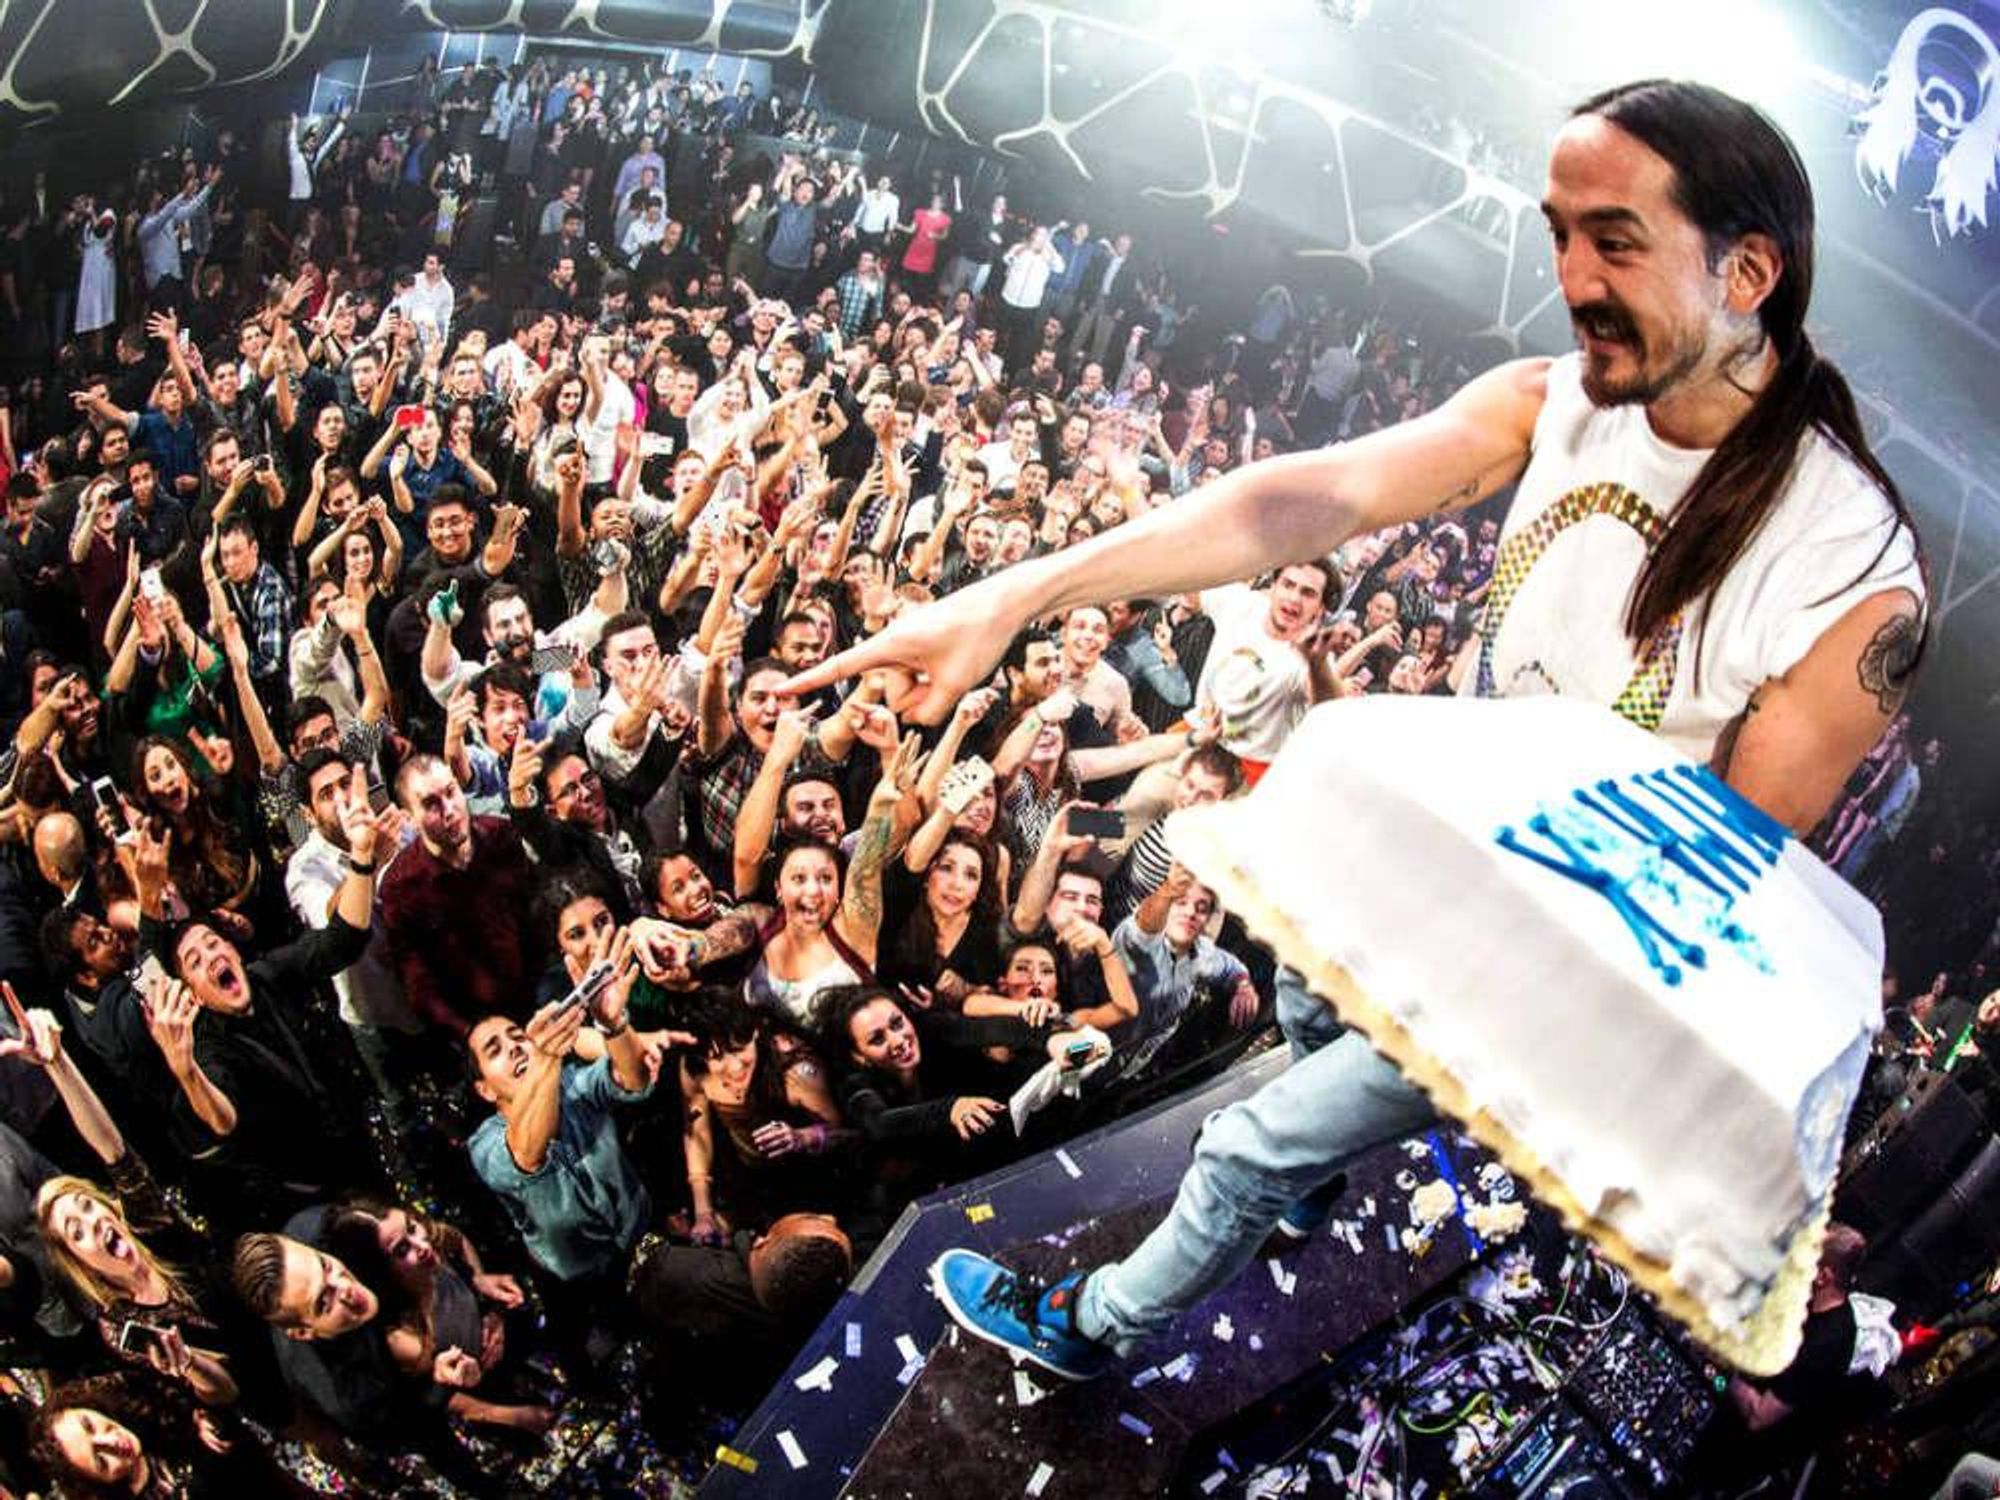 DJ Steve Aoki holding cake